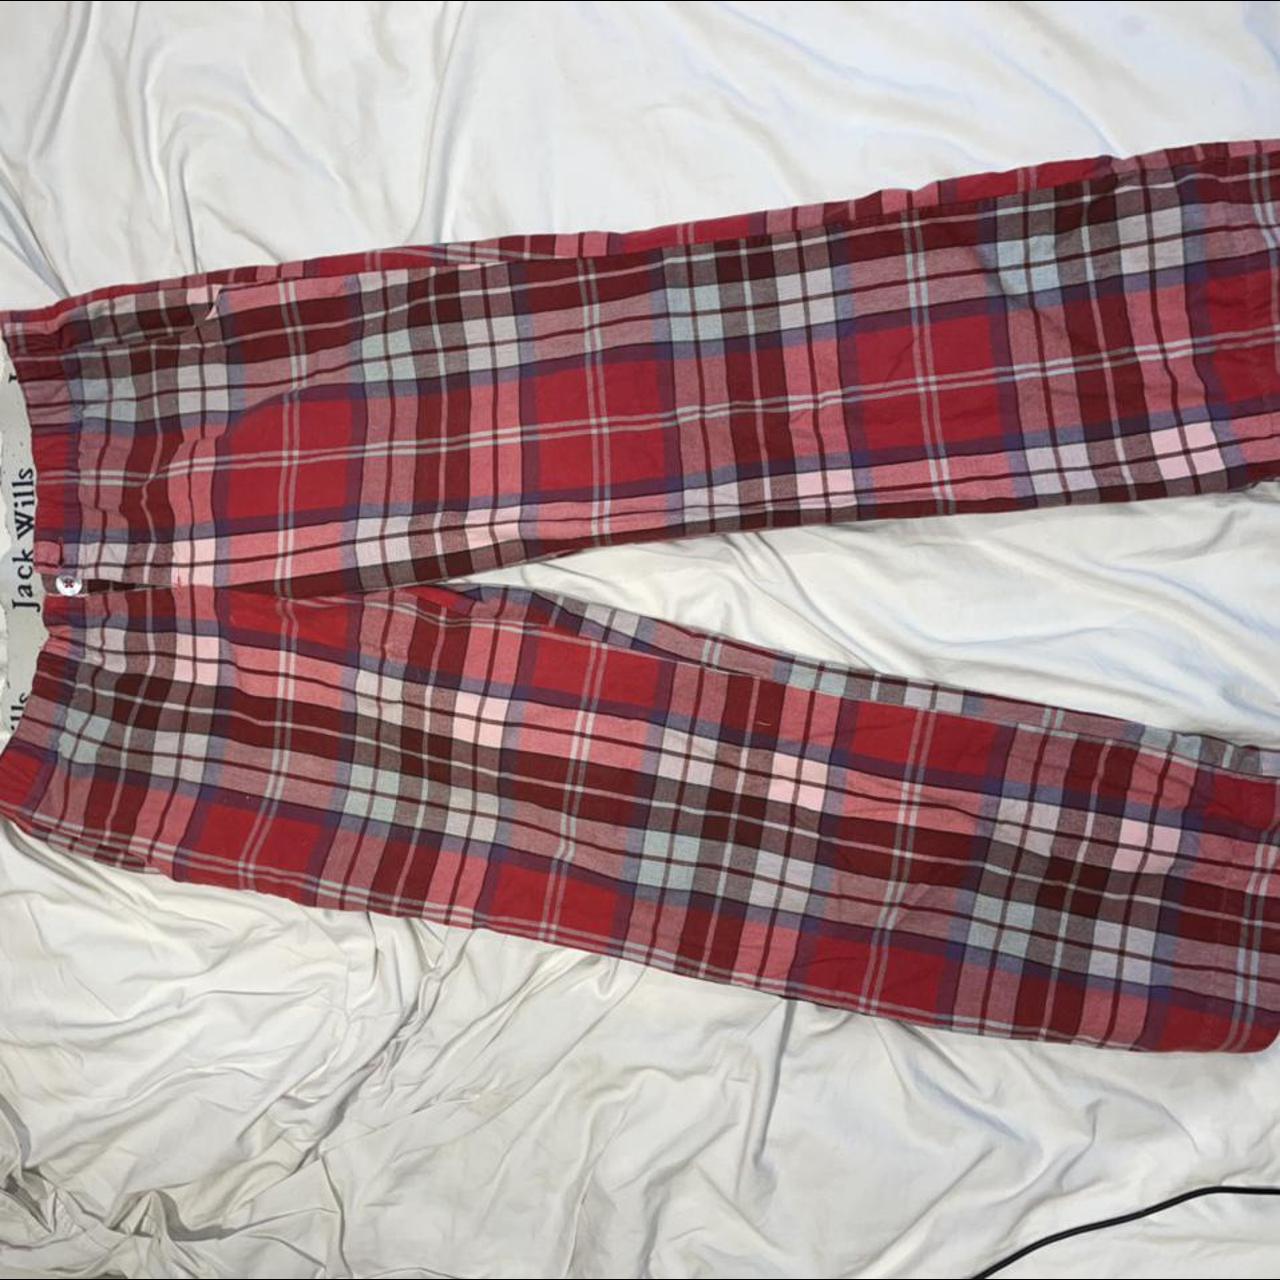 Jack Wills Women's Pajamas | Depop